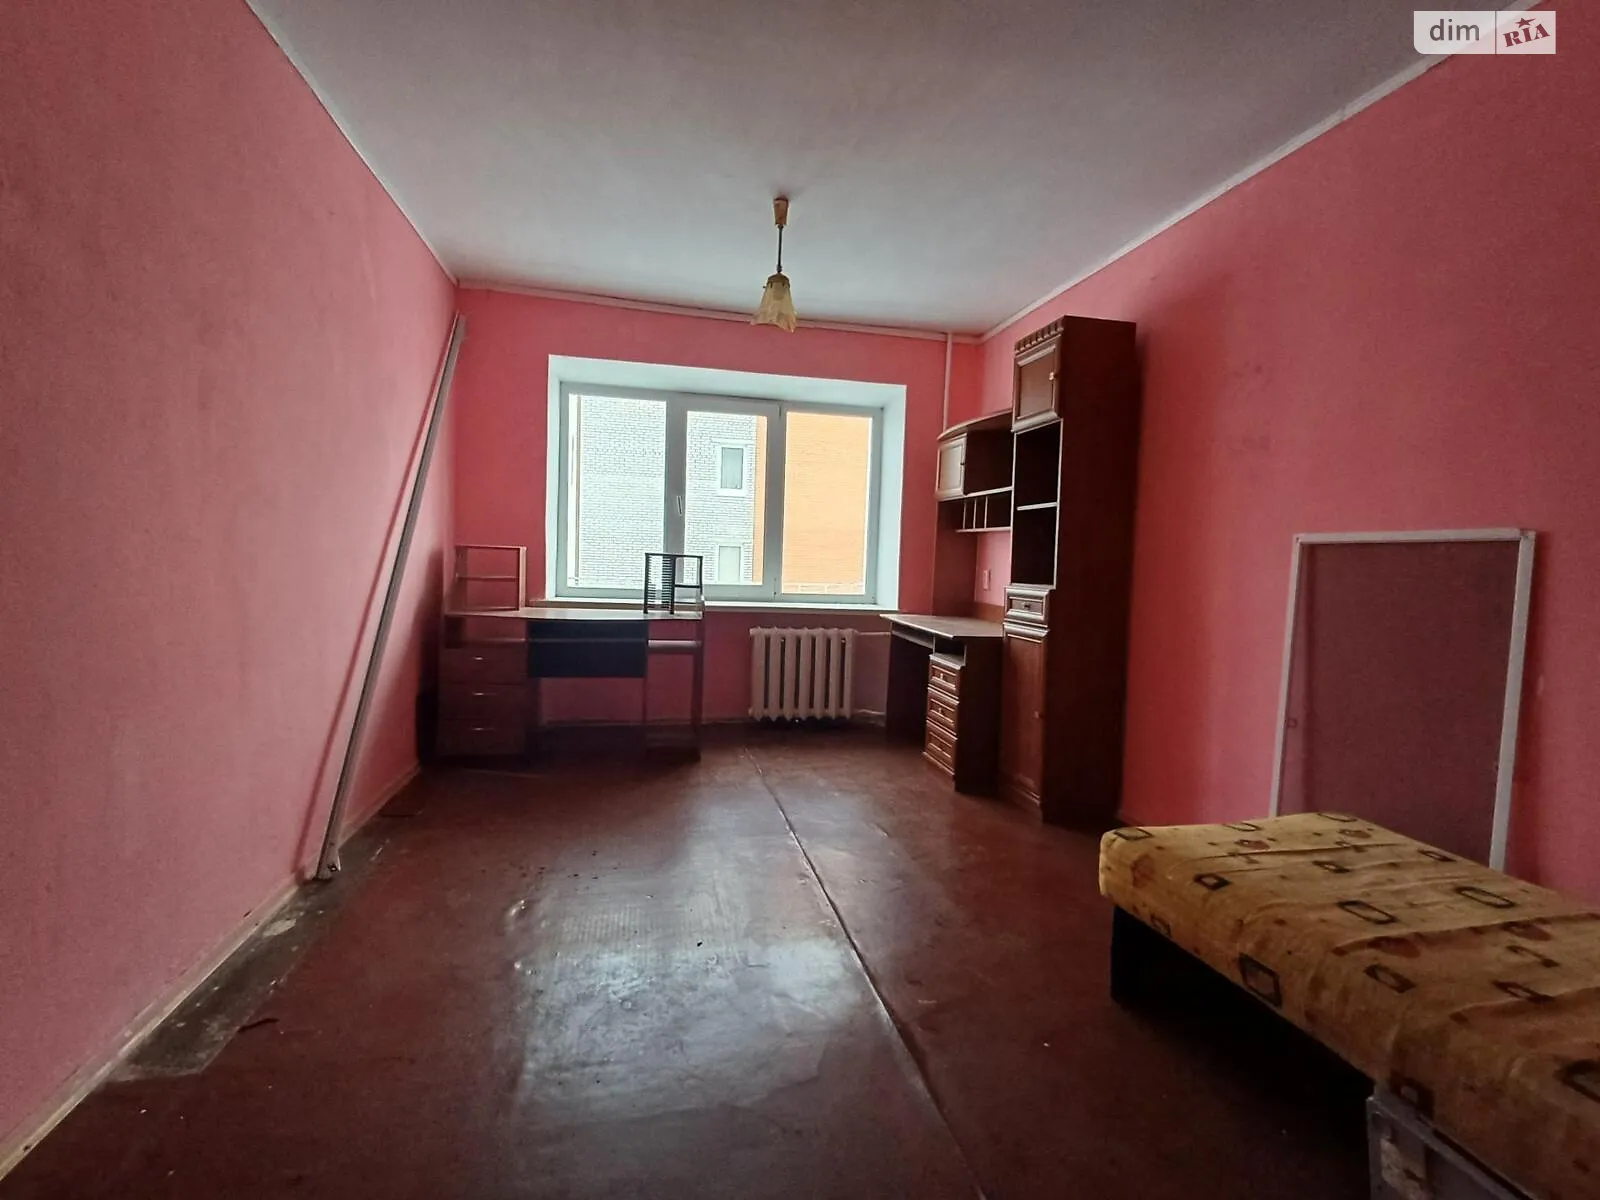 Продается комната 17 кв. м в Тернополе - фото 2